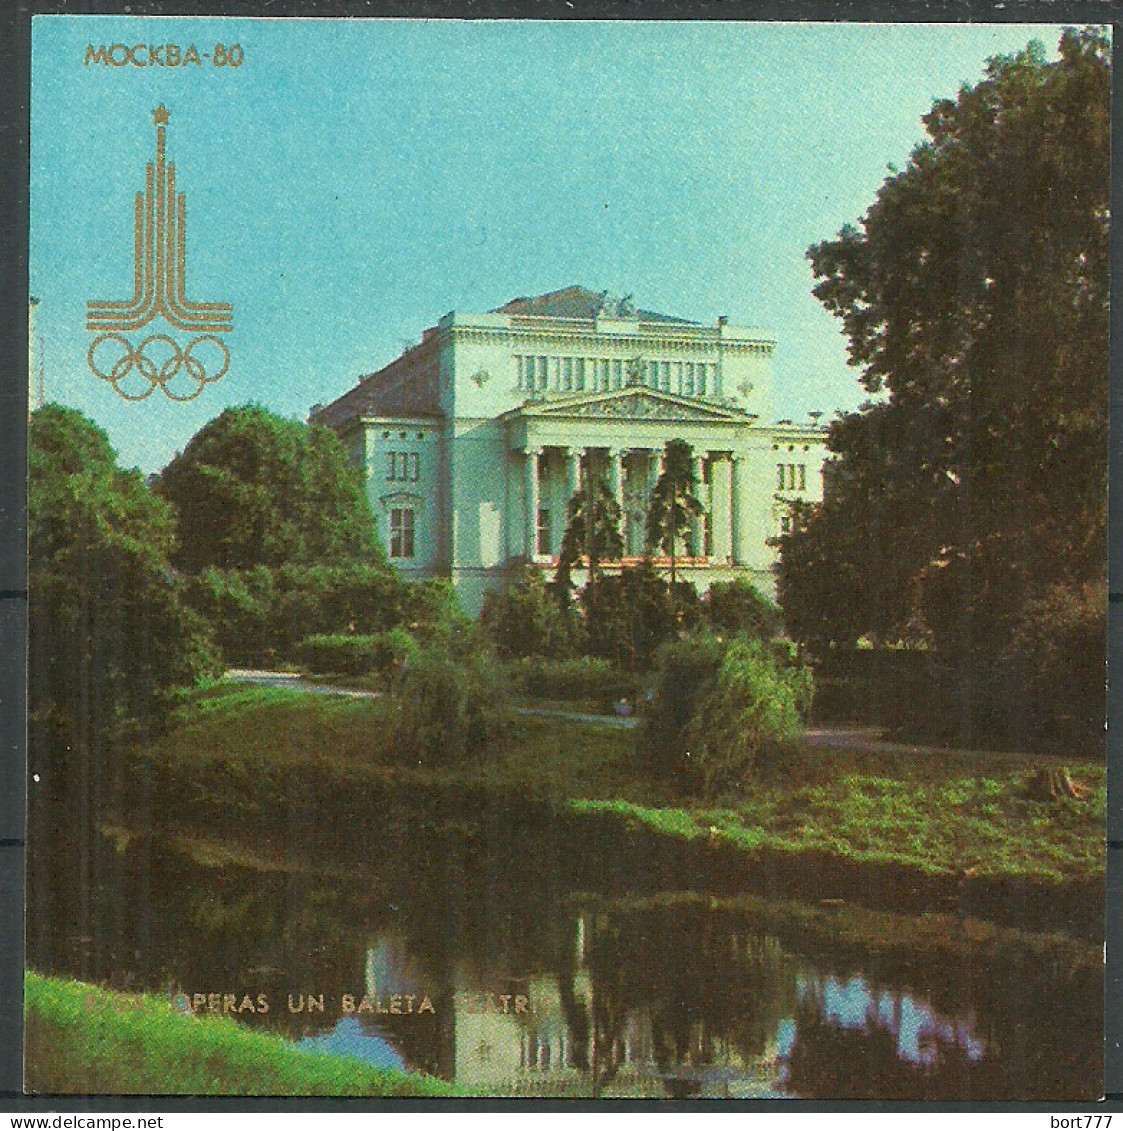 RUSSIA Latvia 1978 Special Matchbox Label 93x93 Mm (catalog # 392) - Zündholzschachteletiketten